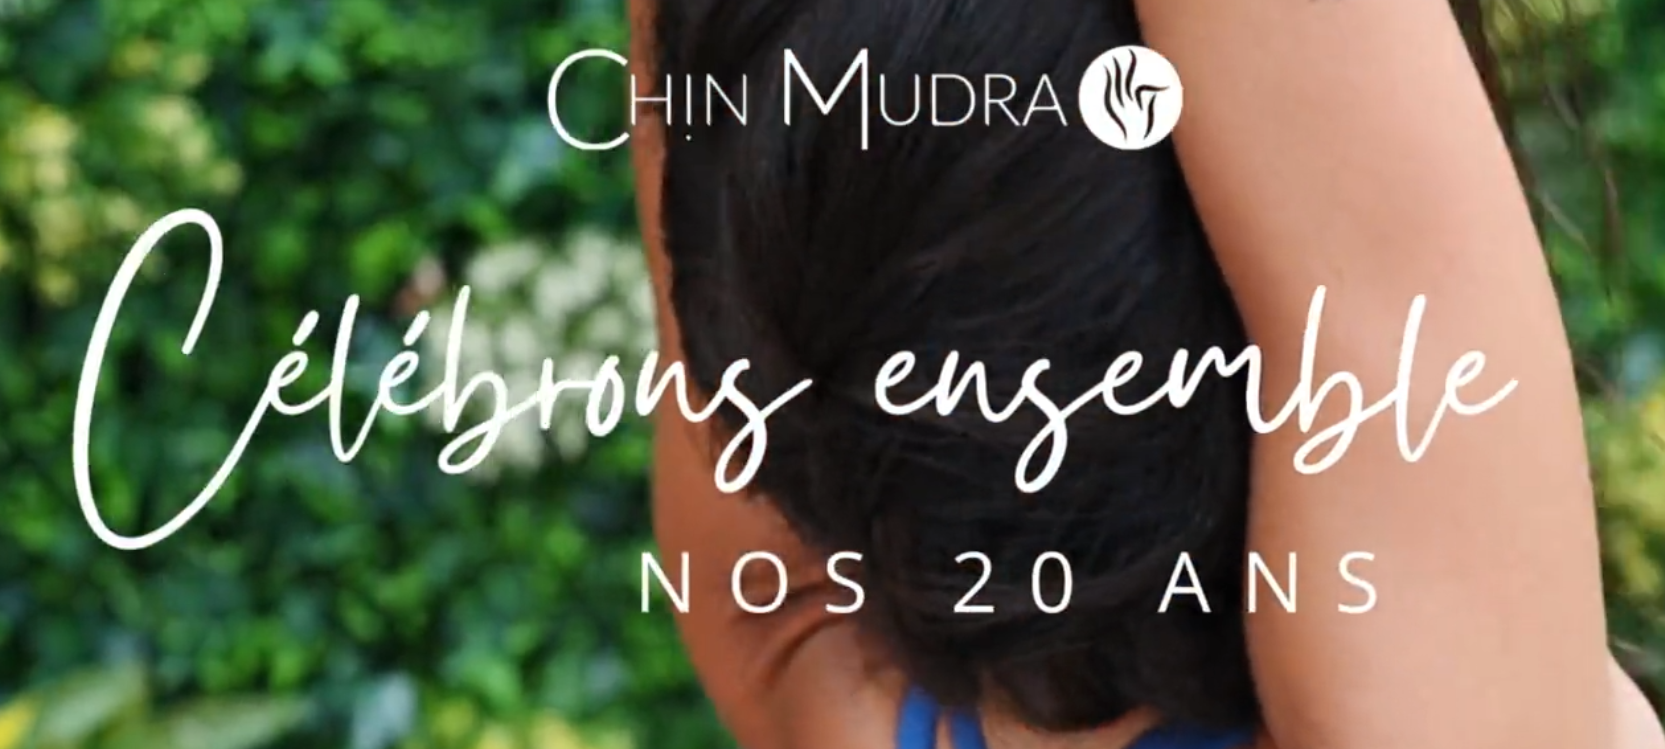 Chin Mudra fête ses 20 ans !